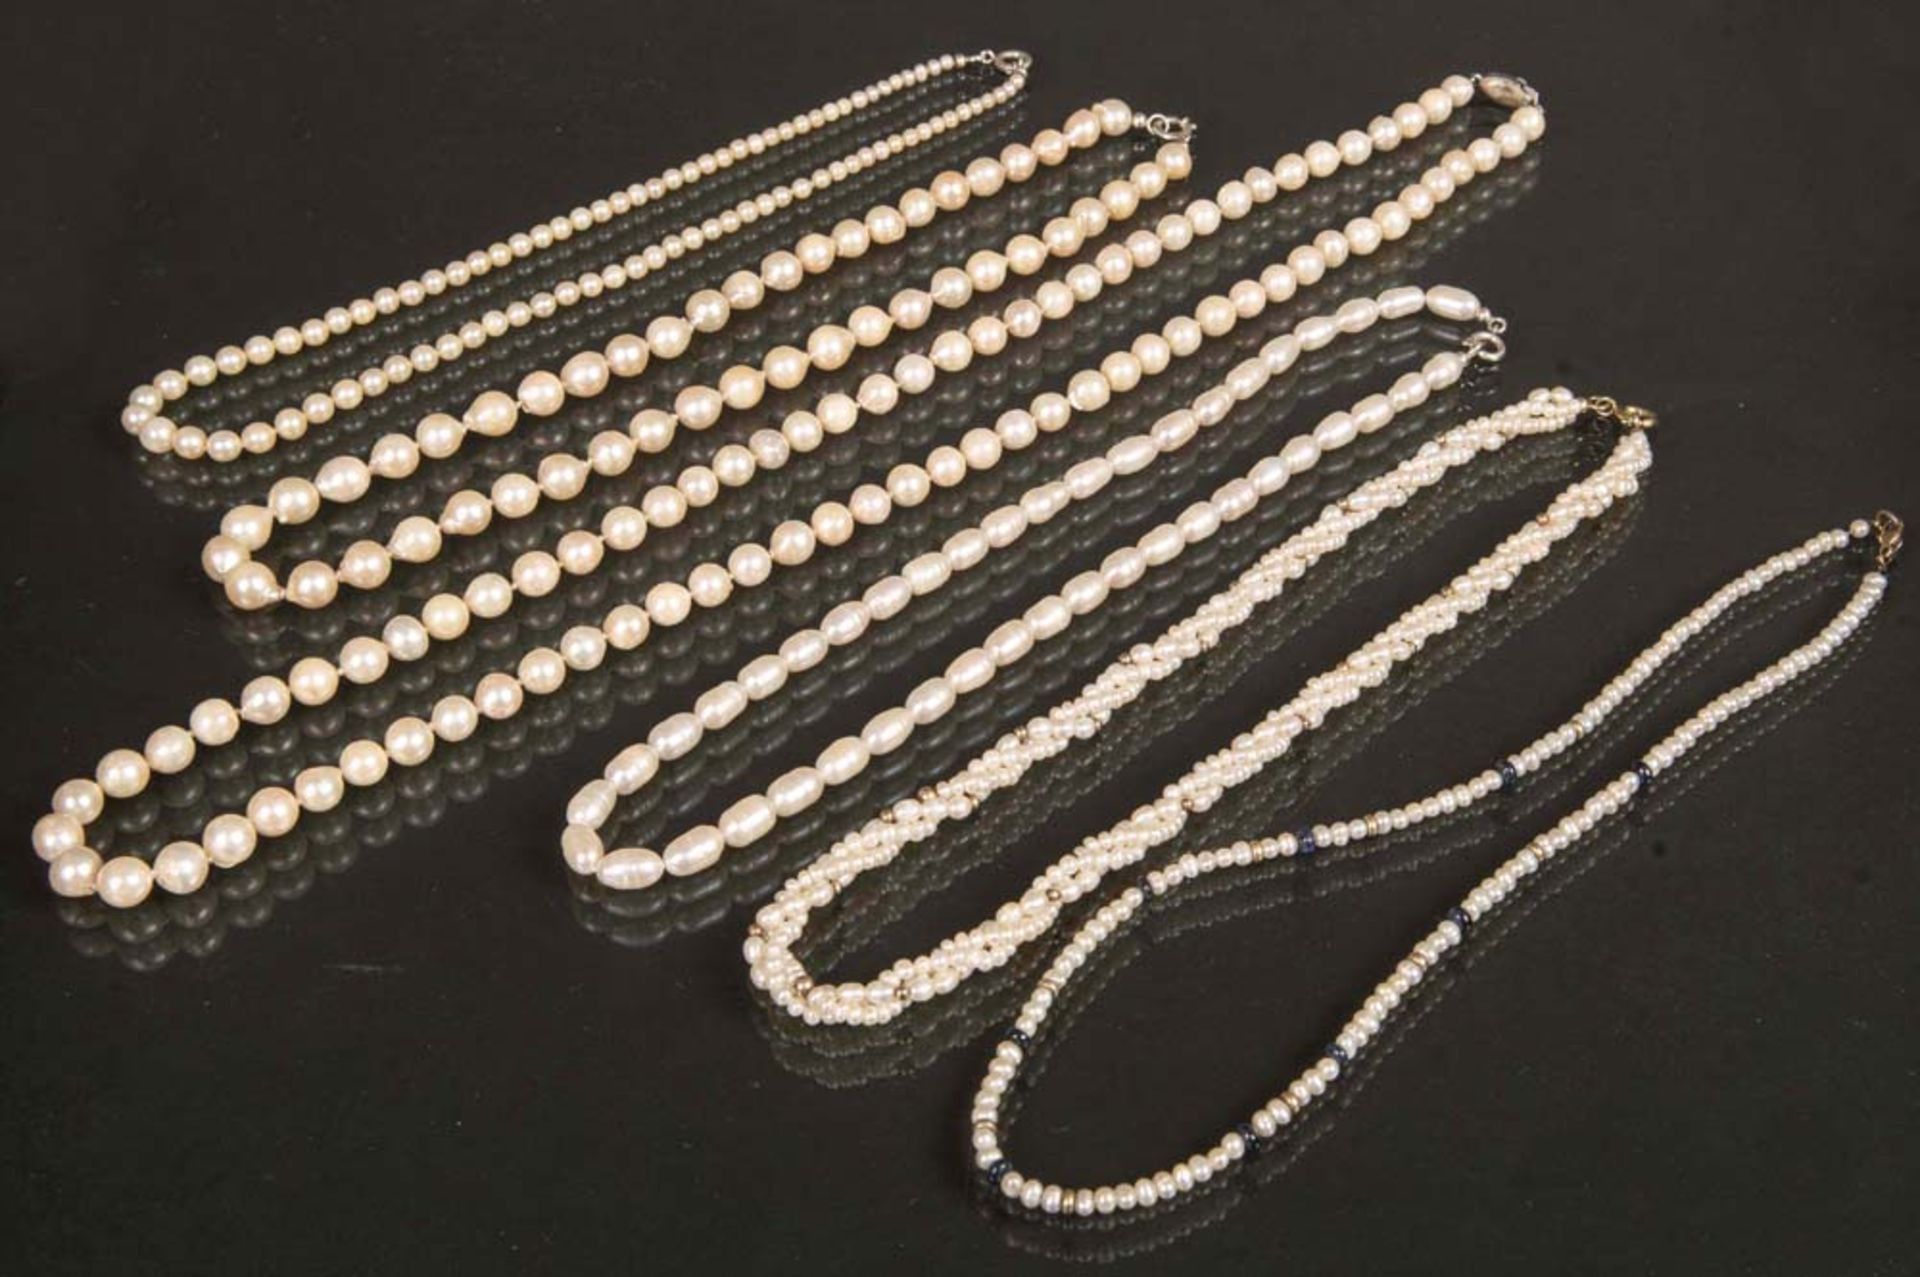 Sechs Perlenketten. Teils mit Silberverschluss.